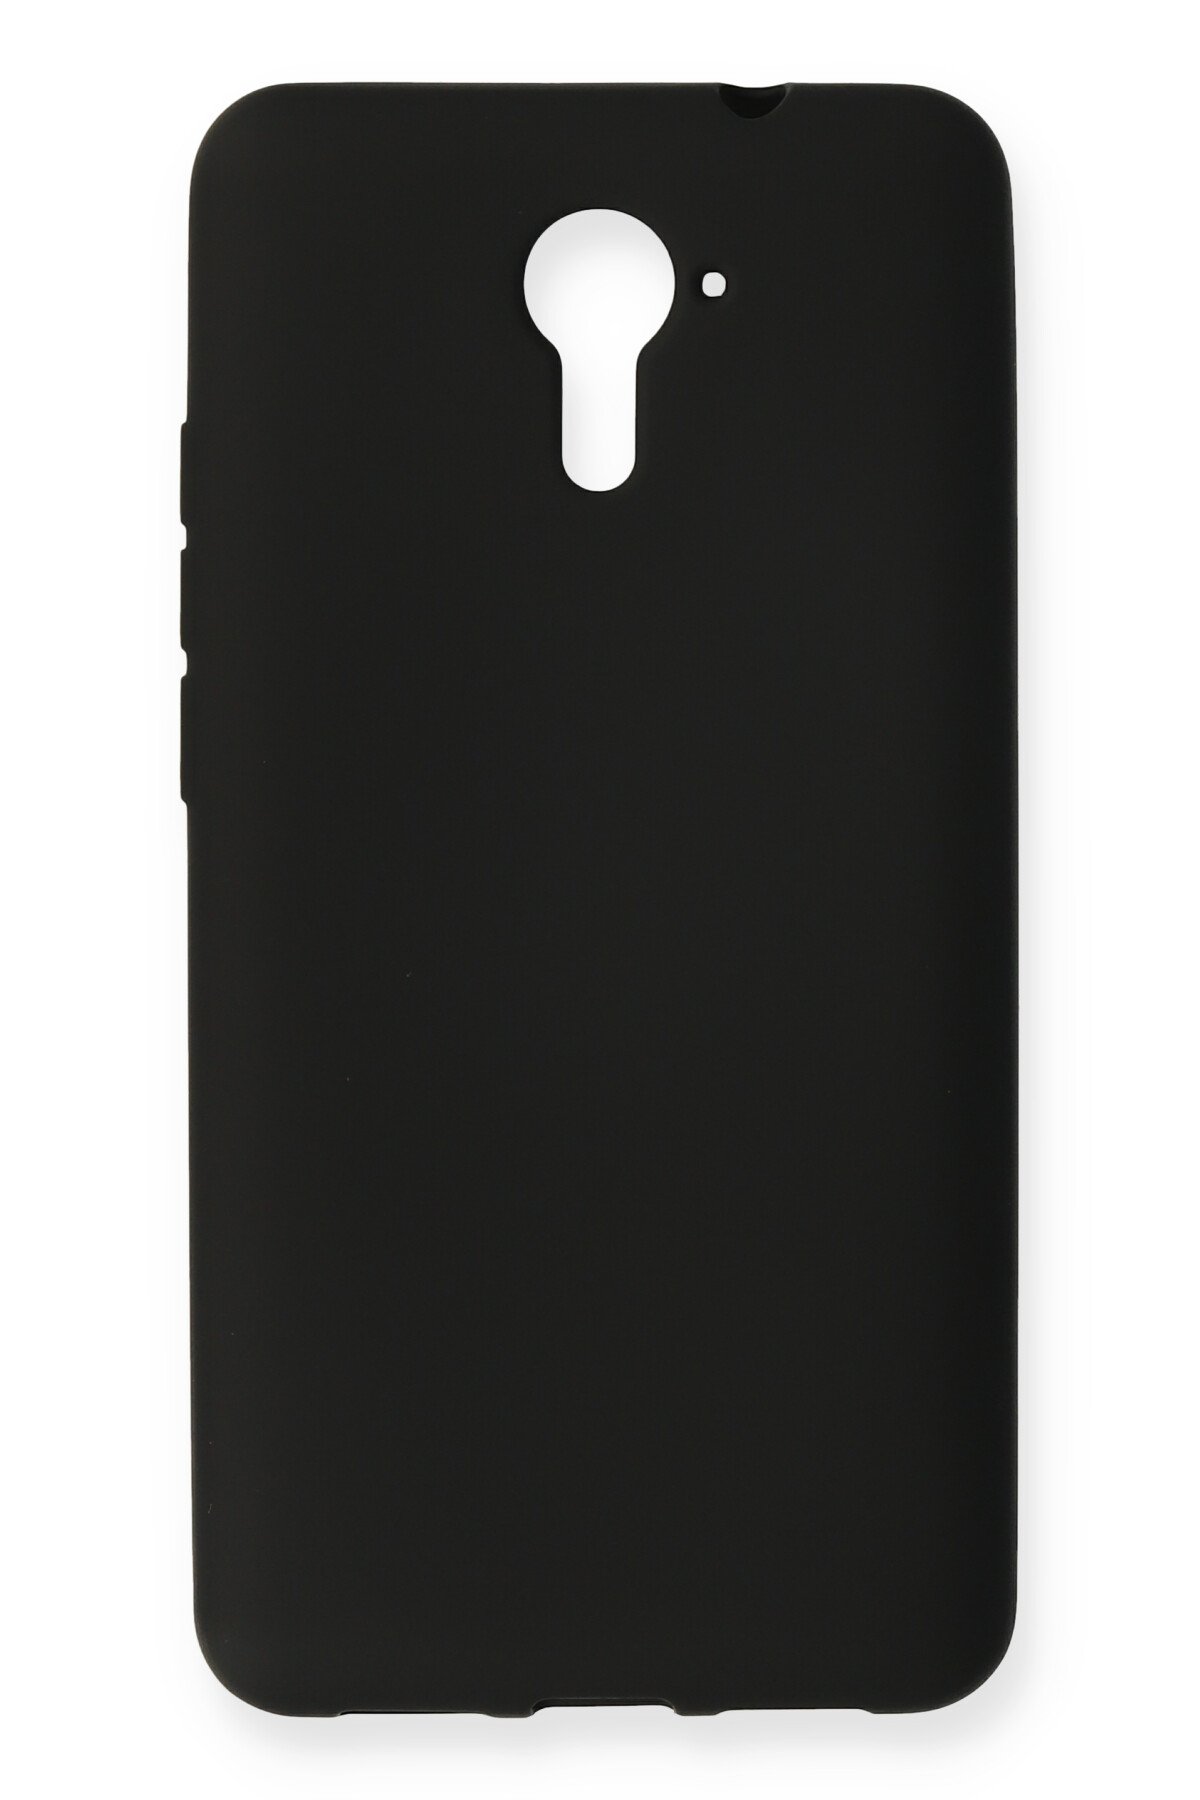 NewFace Newface Casper Via M2 Kılıf Premium Rubber Silikon - Siyah